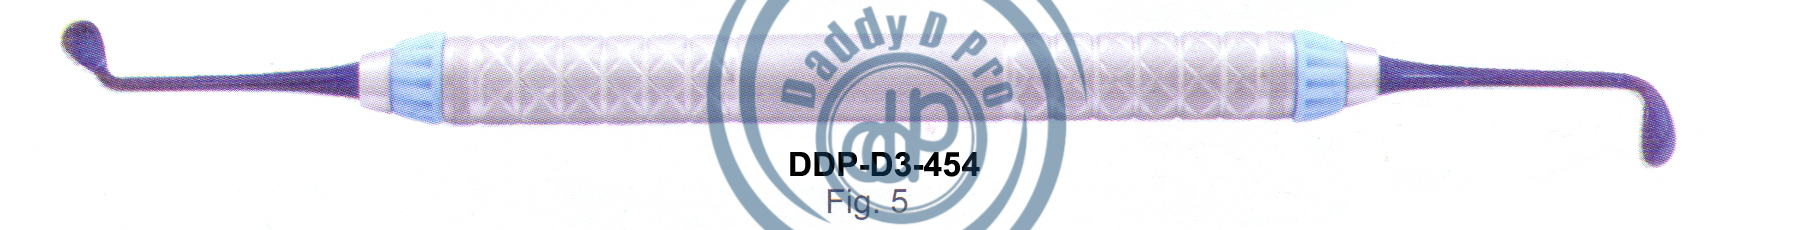 images/DDP-D3-454.png